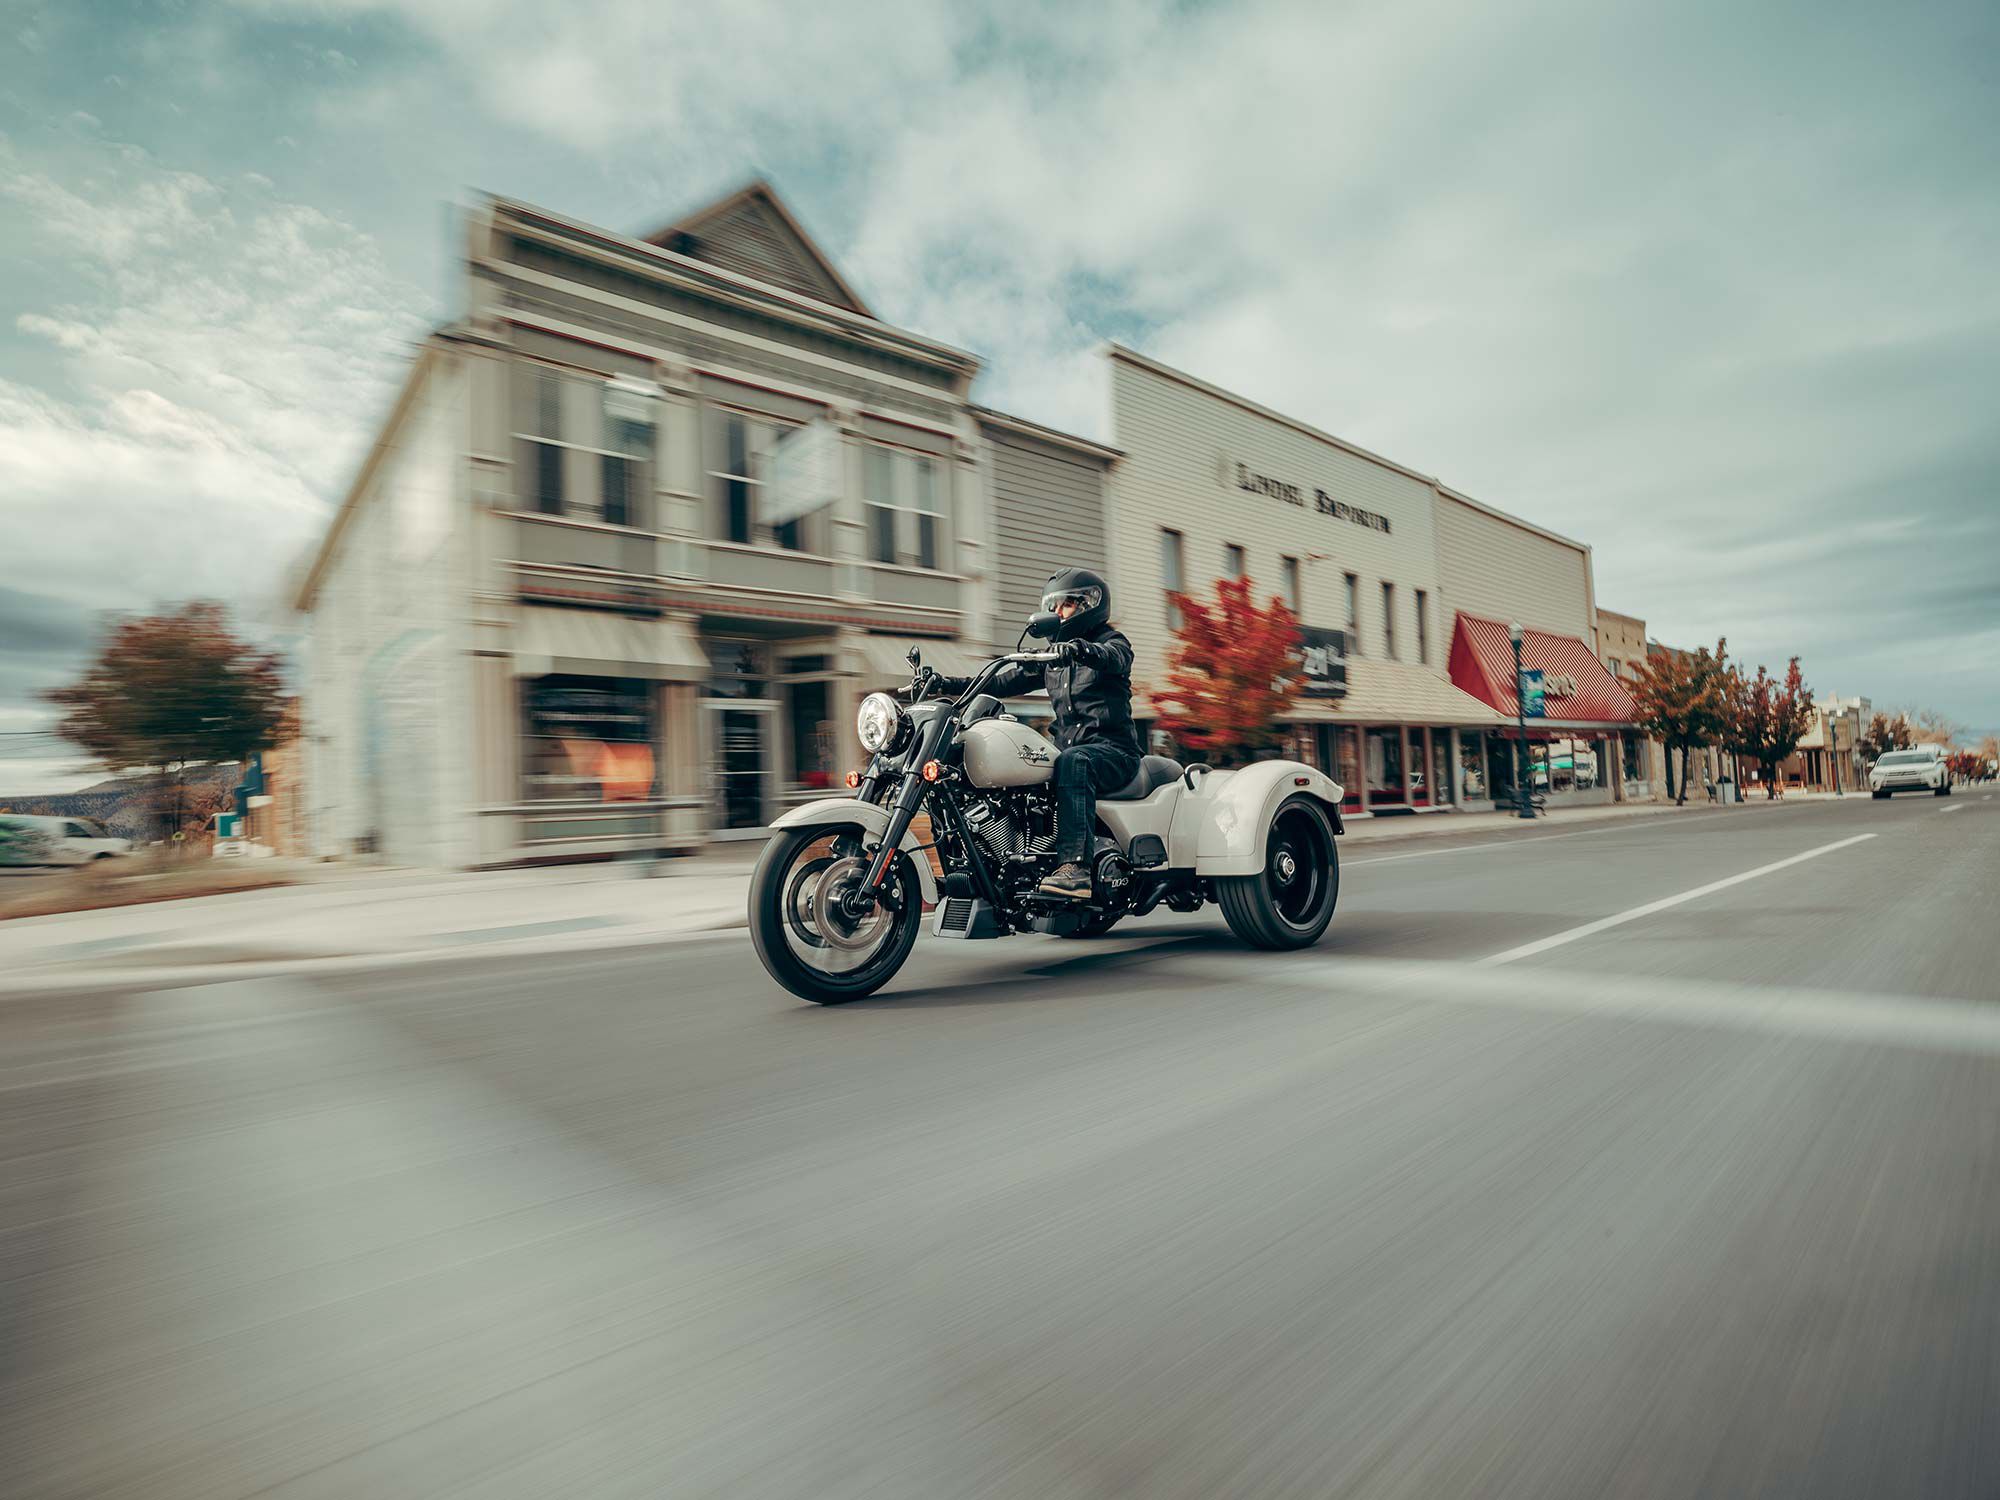 Three’s a fast crowd sometimes. The 2023 Harley-Davidson Freewheeler.